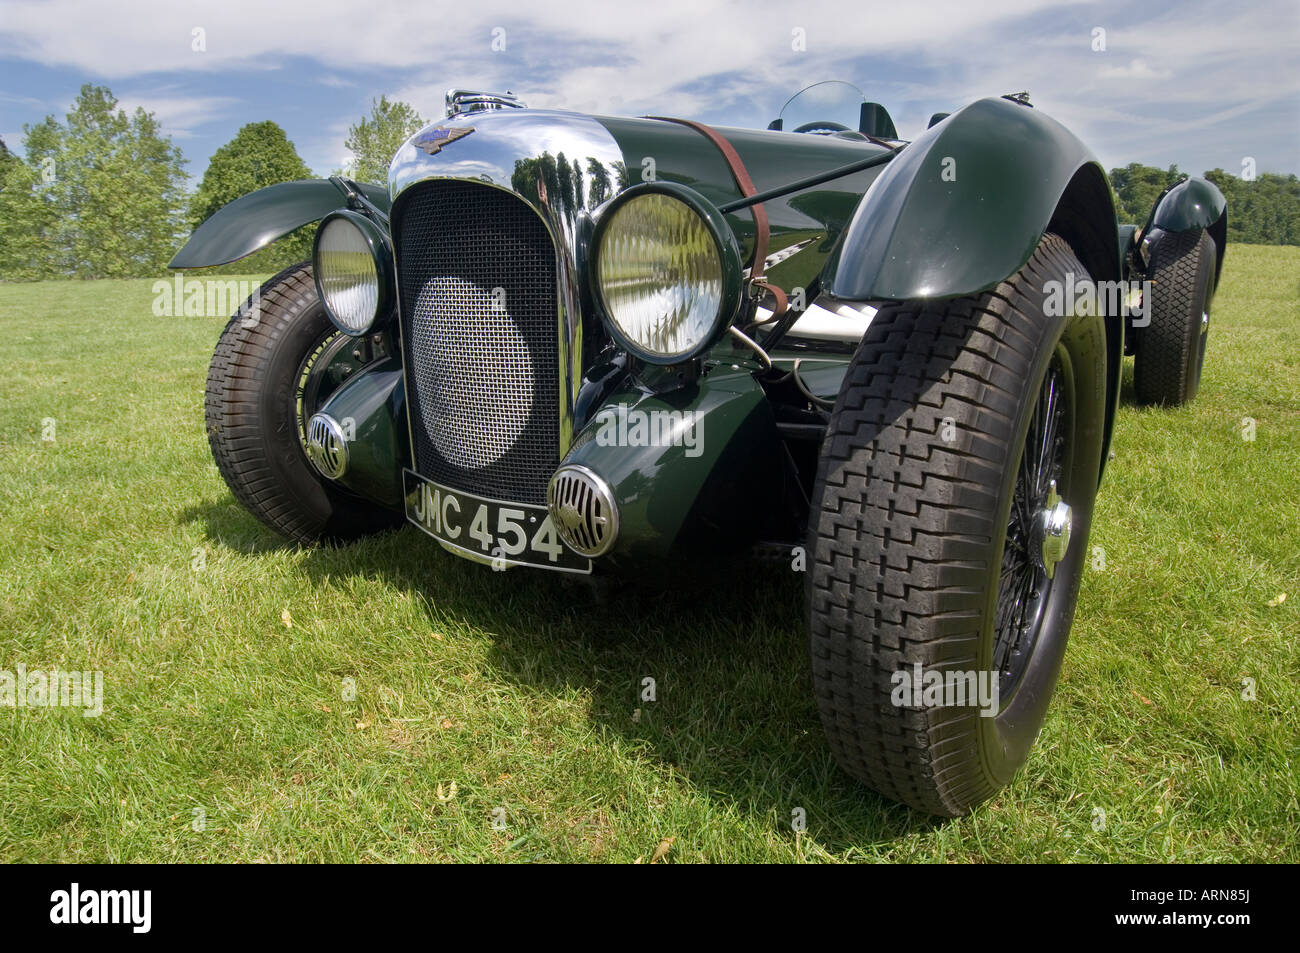 Un gros plan de la face d'un British Racing Green historique 1939 Lagonda V12 Le Mans motor car se tenait sur l'herbe Banque D'Images